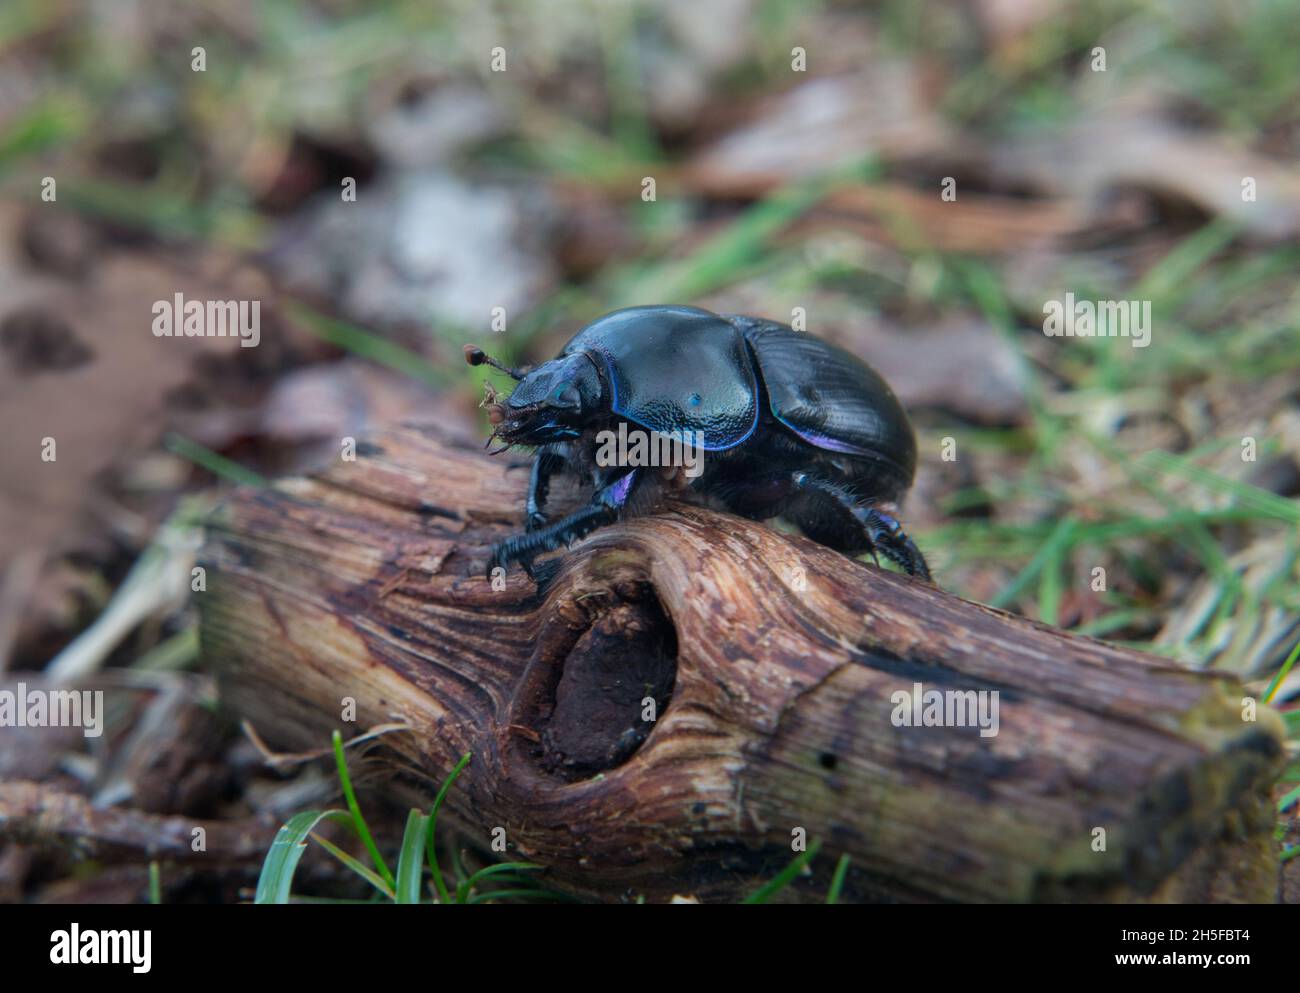 Dor, an earth-boring dung beetle, climbing over a piece of wood Stock Photo